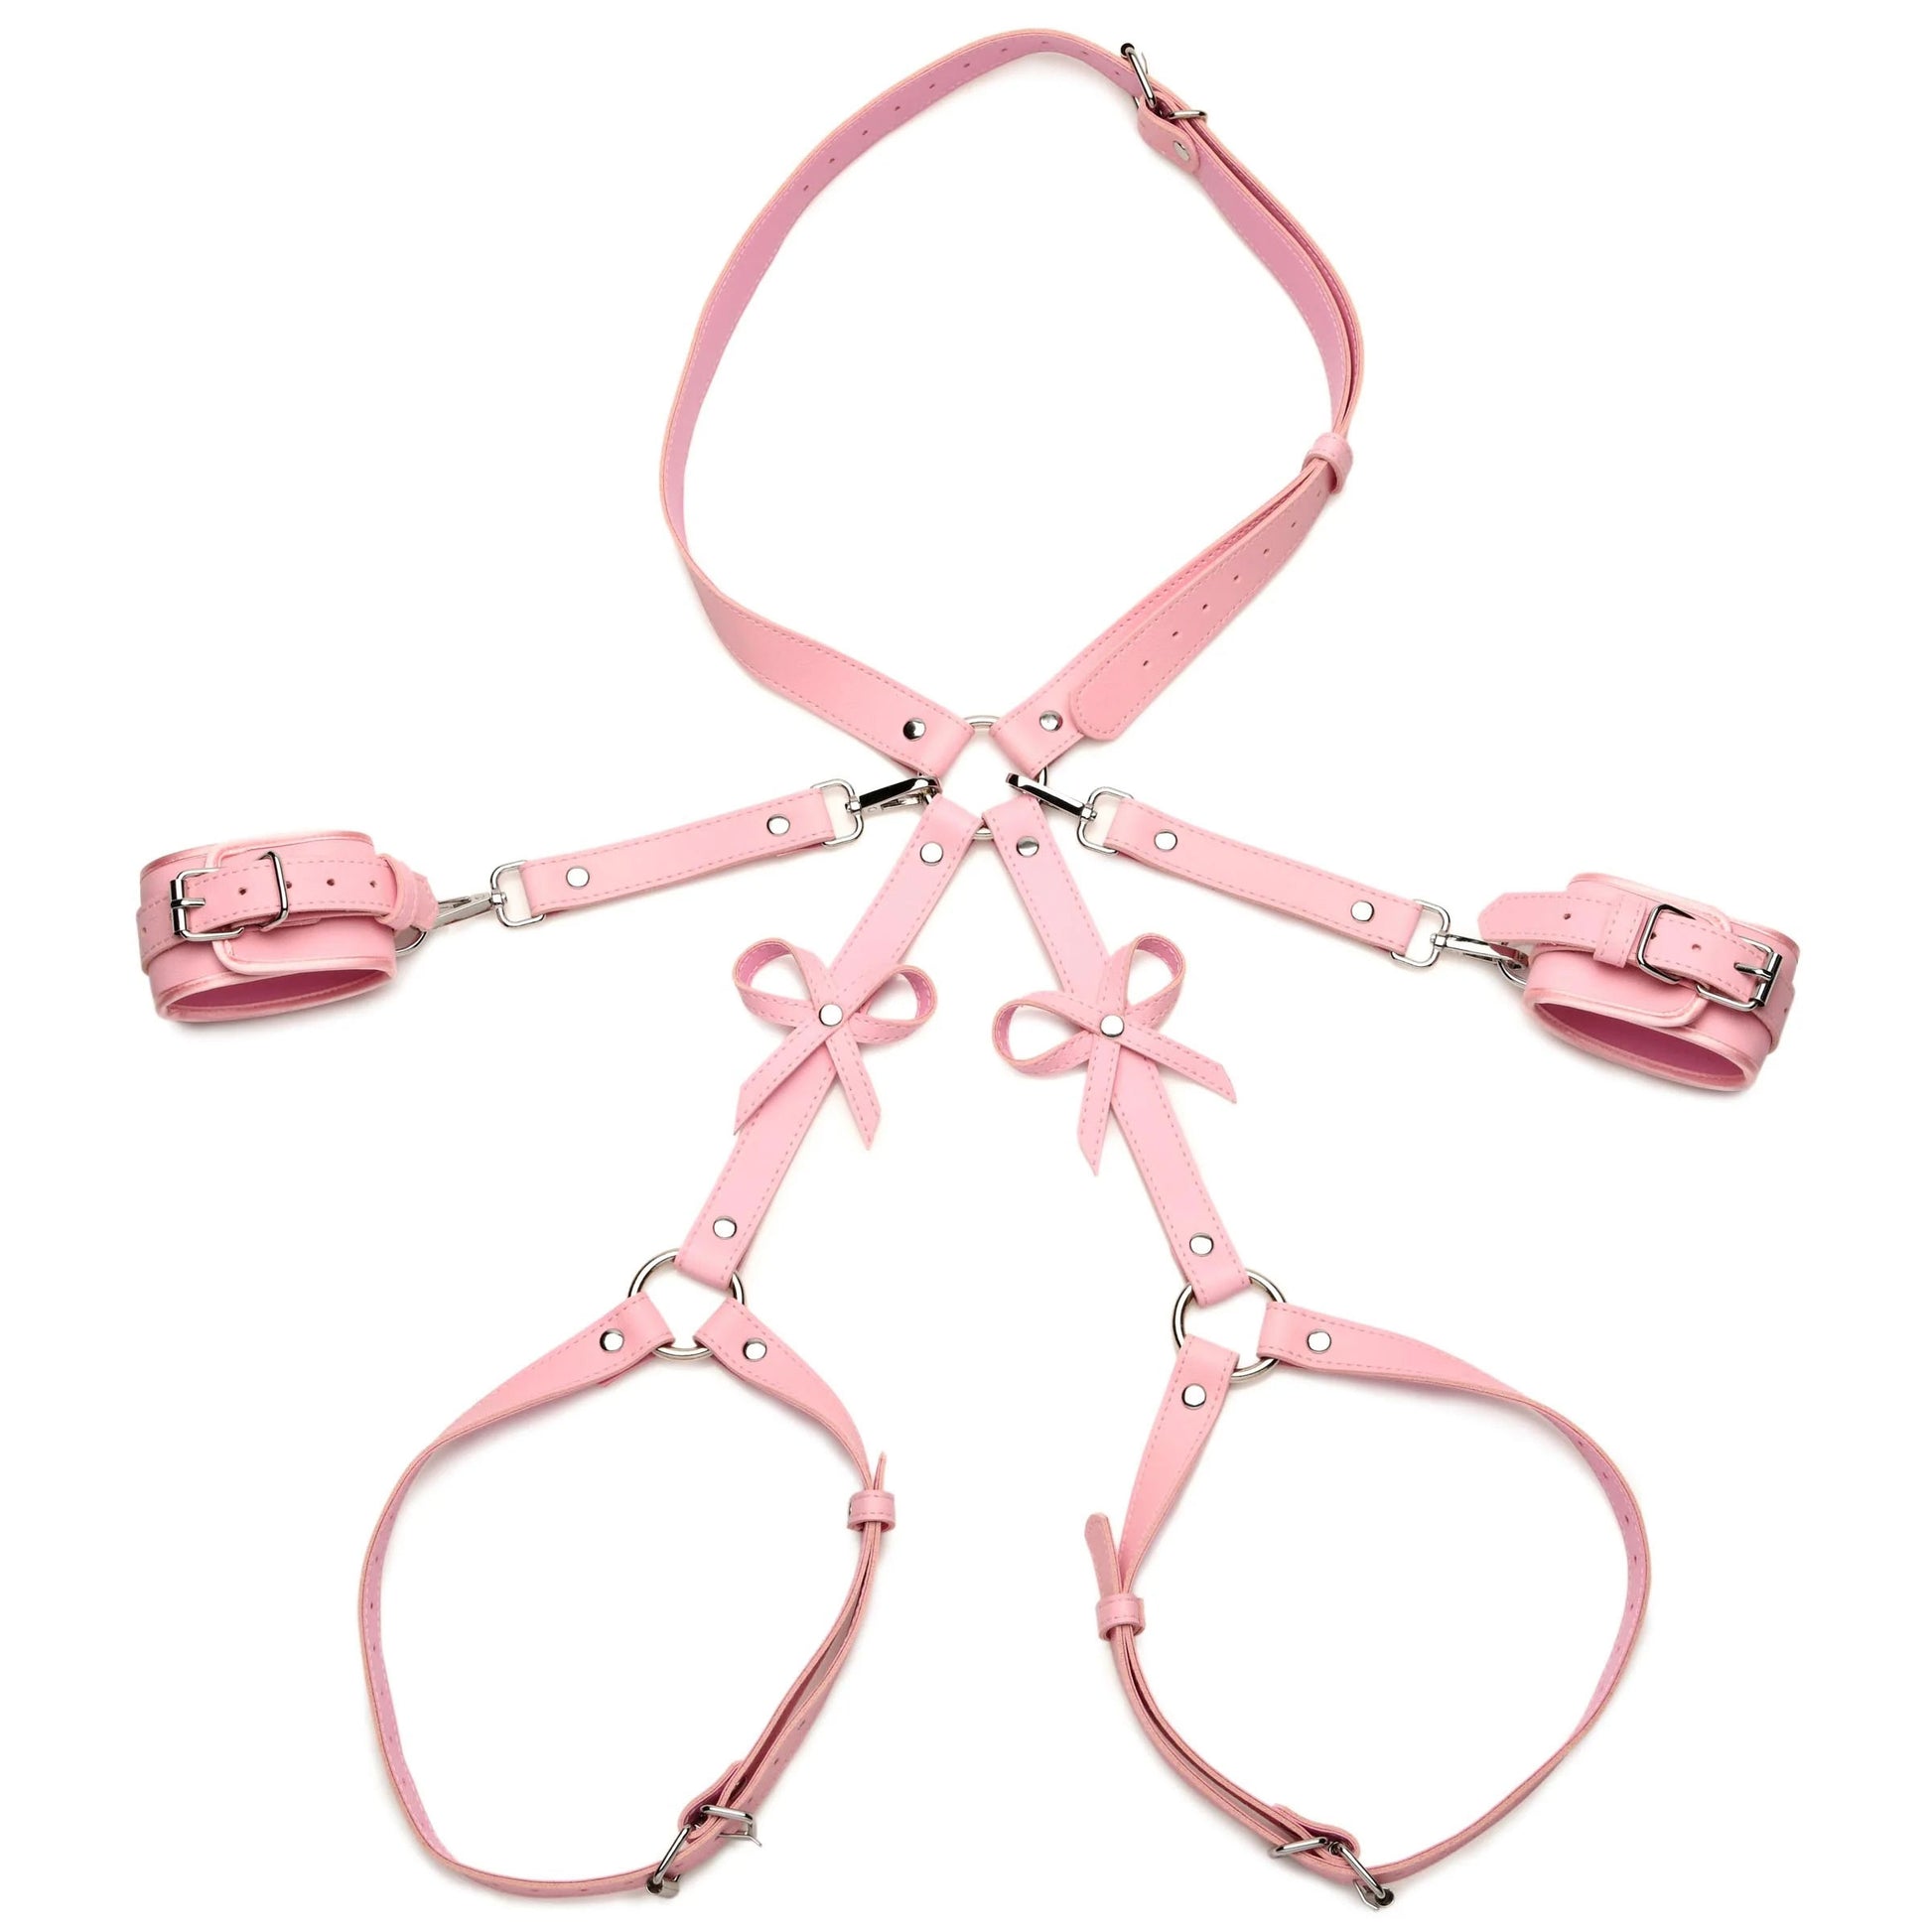 Bondage Harness With Bows - Medium/large - Pink